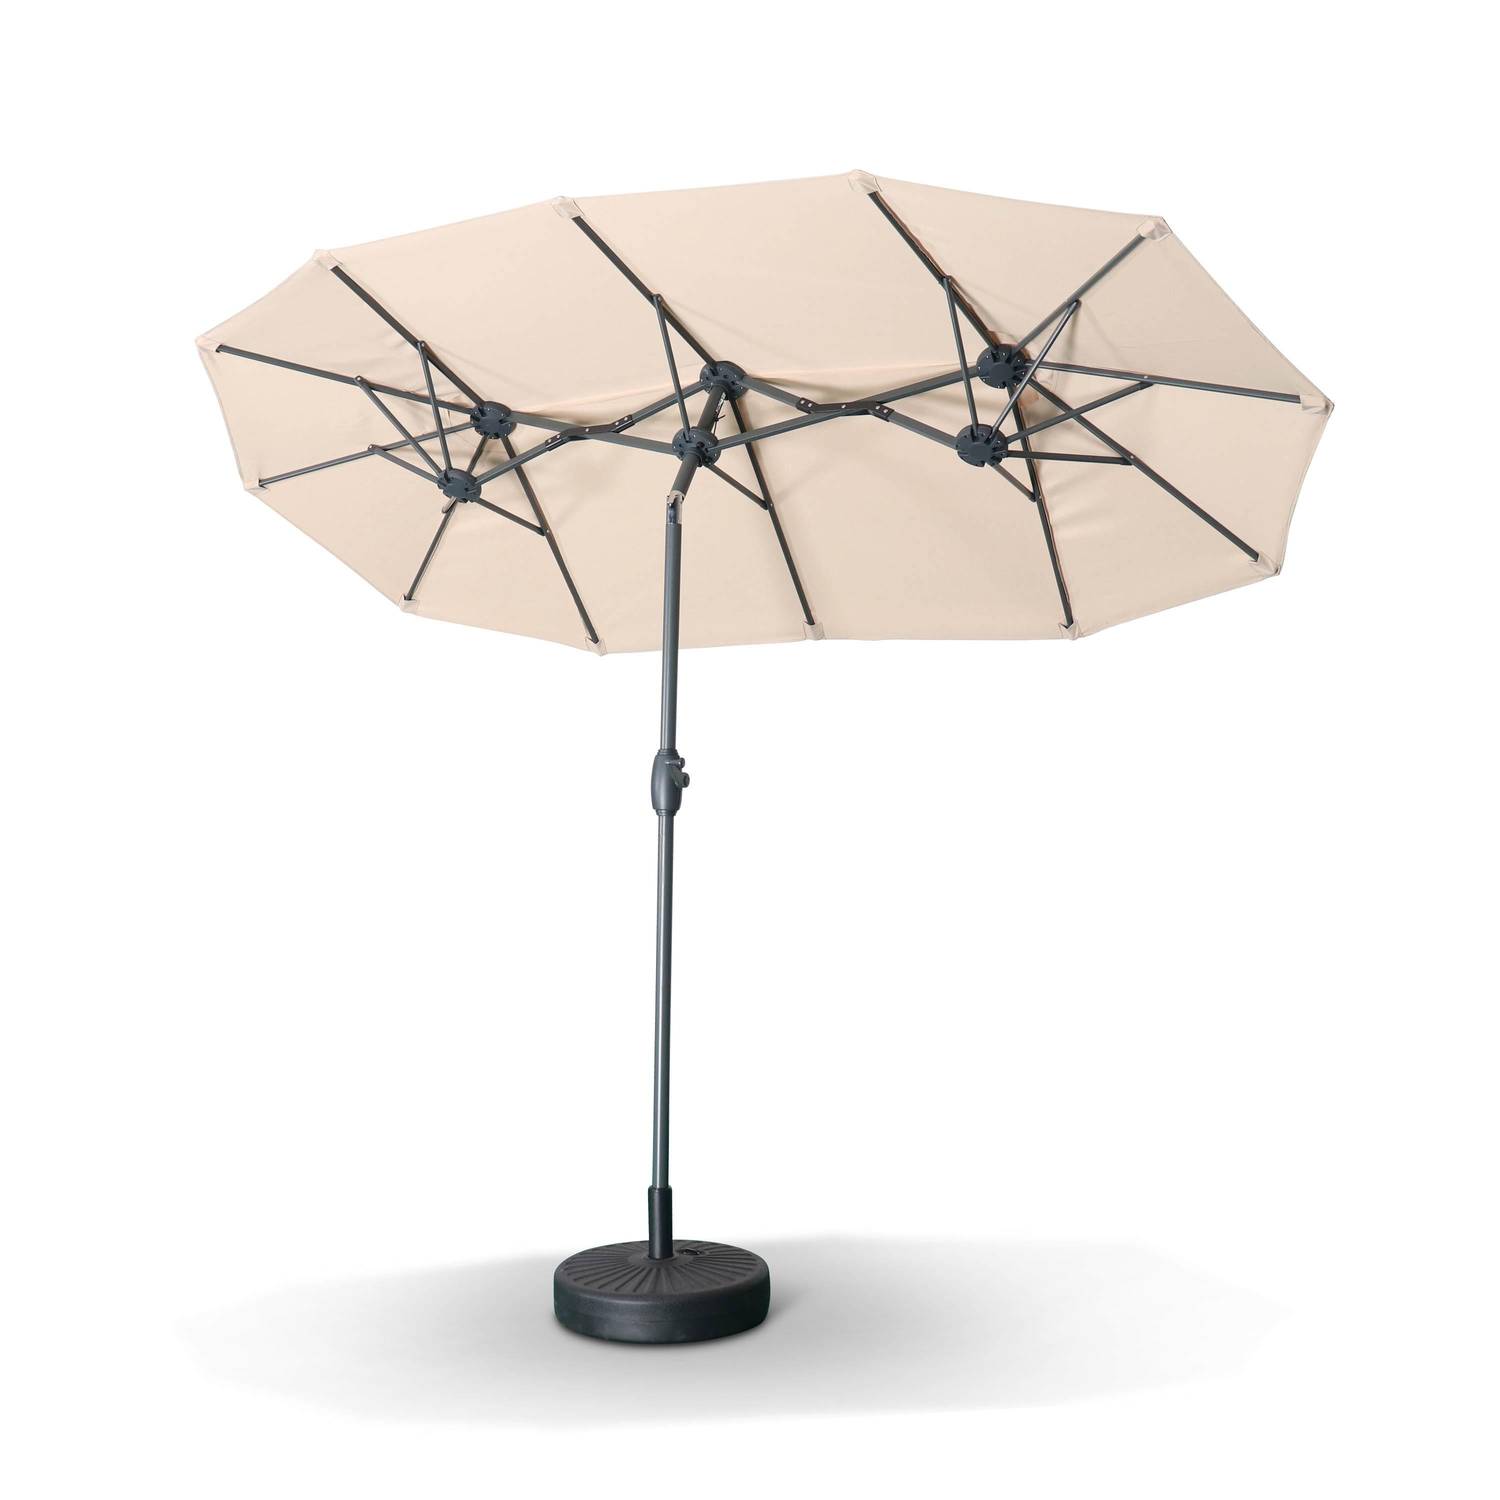 Ovalen stokparasol, dubbel, 1x3m – Beige – Grote parasol met centrale stok, draaibaar en zwengel Photo2